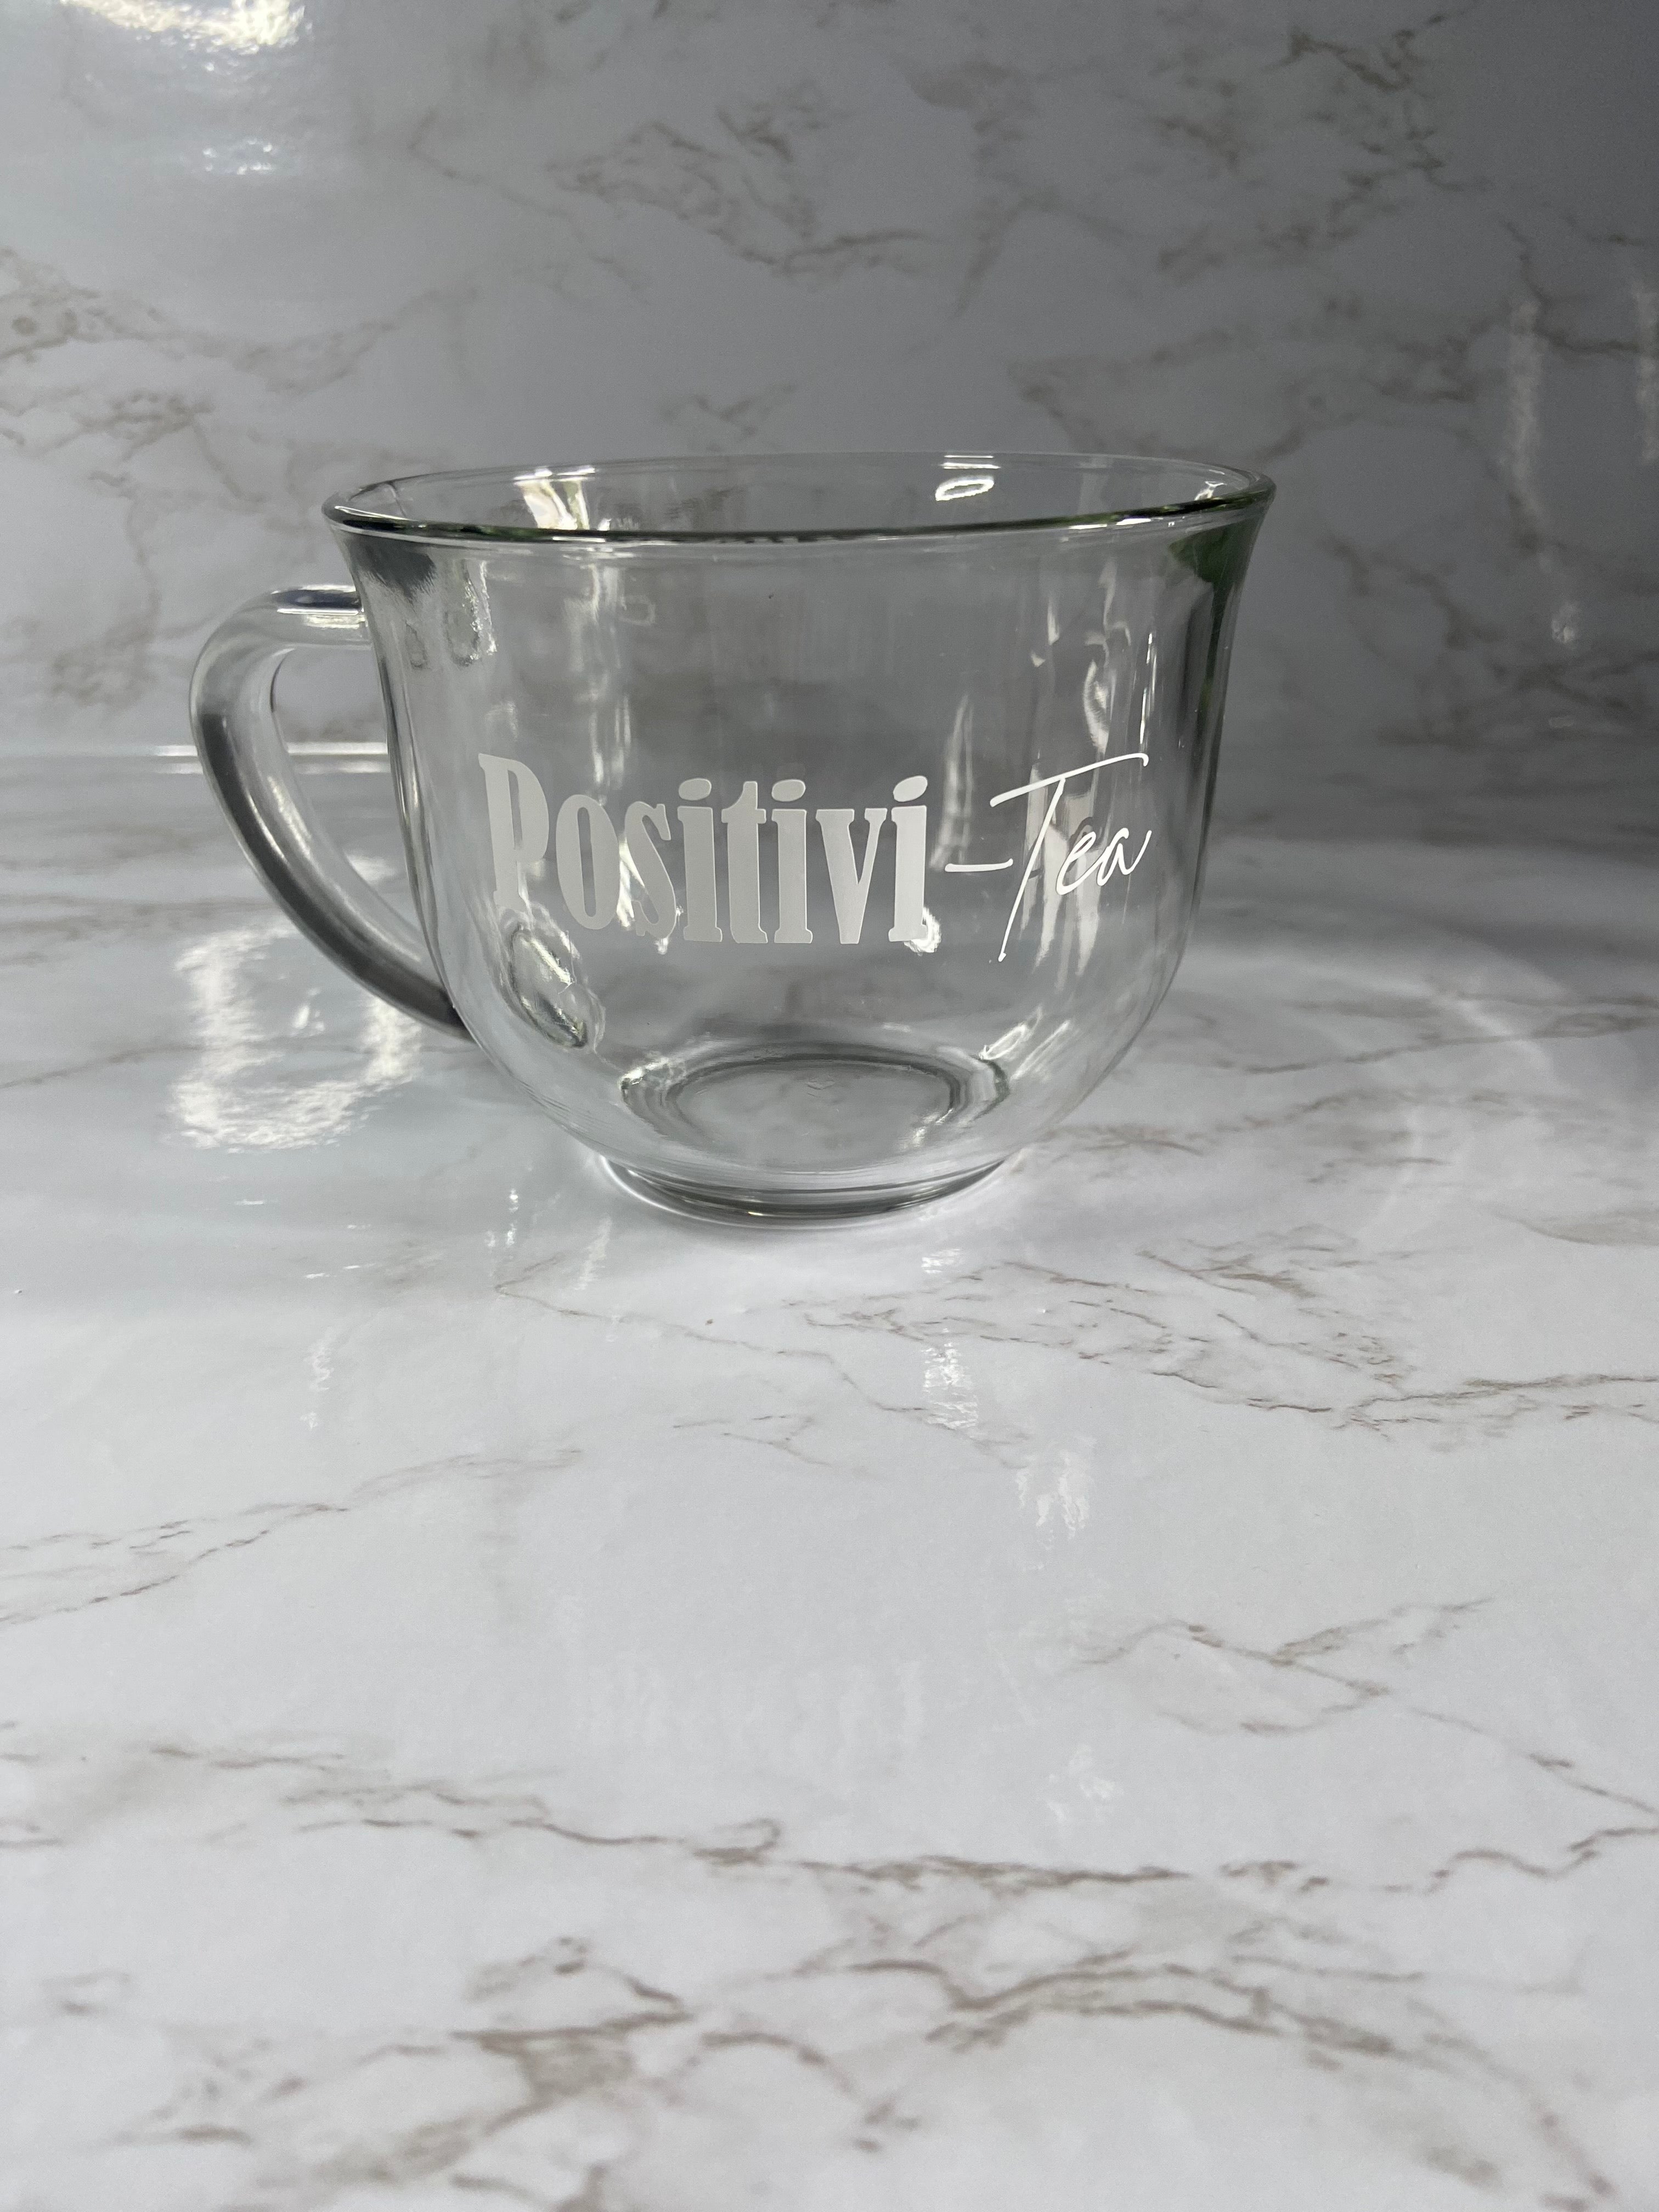 Positivi-Tea Glass Mug